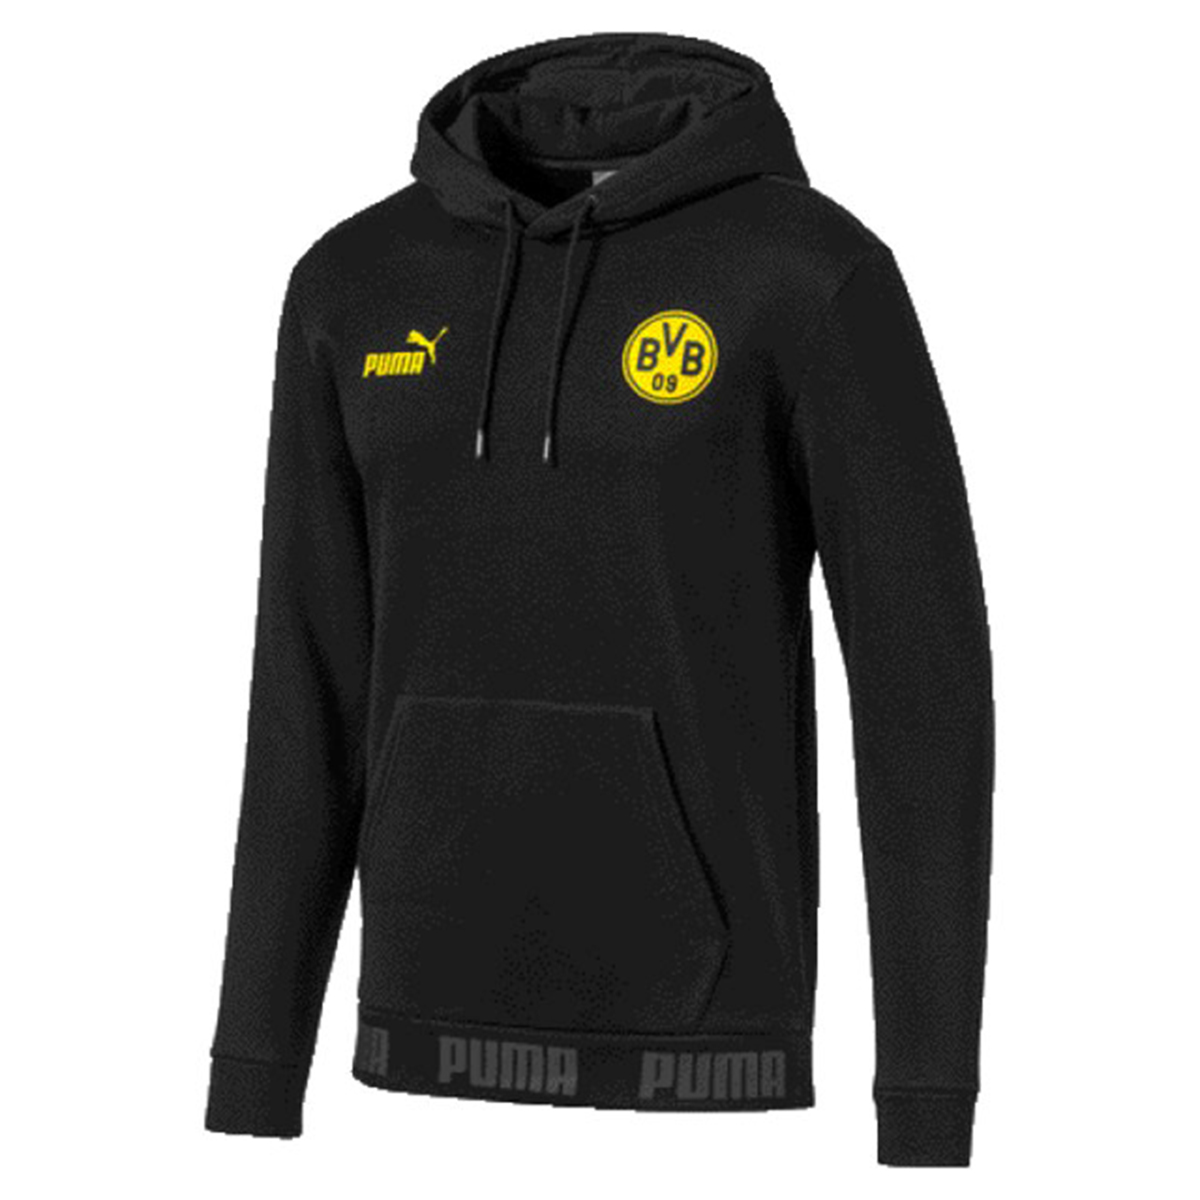 Puma BVB FtblCulture Hoody Borussia Dortmund 09 Herren Sweatshirt 755788 02